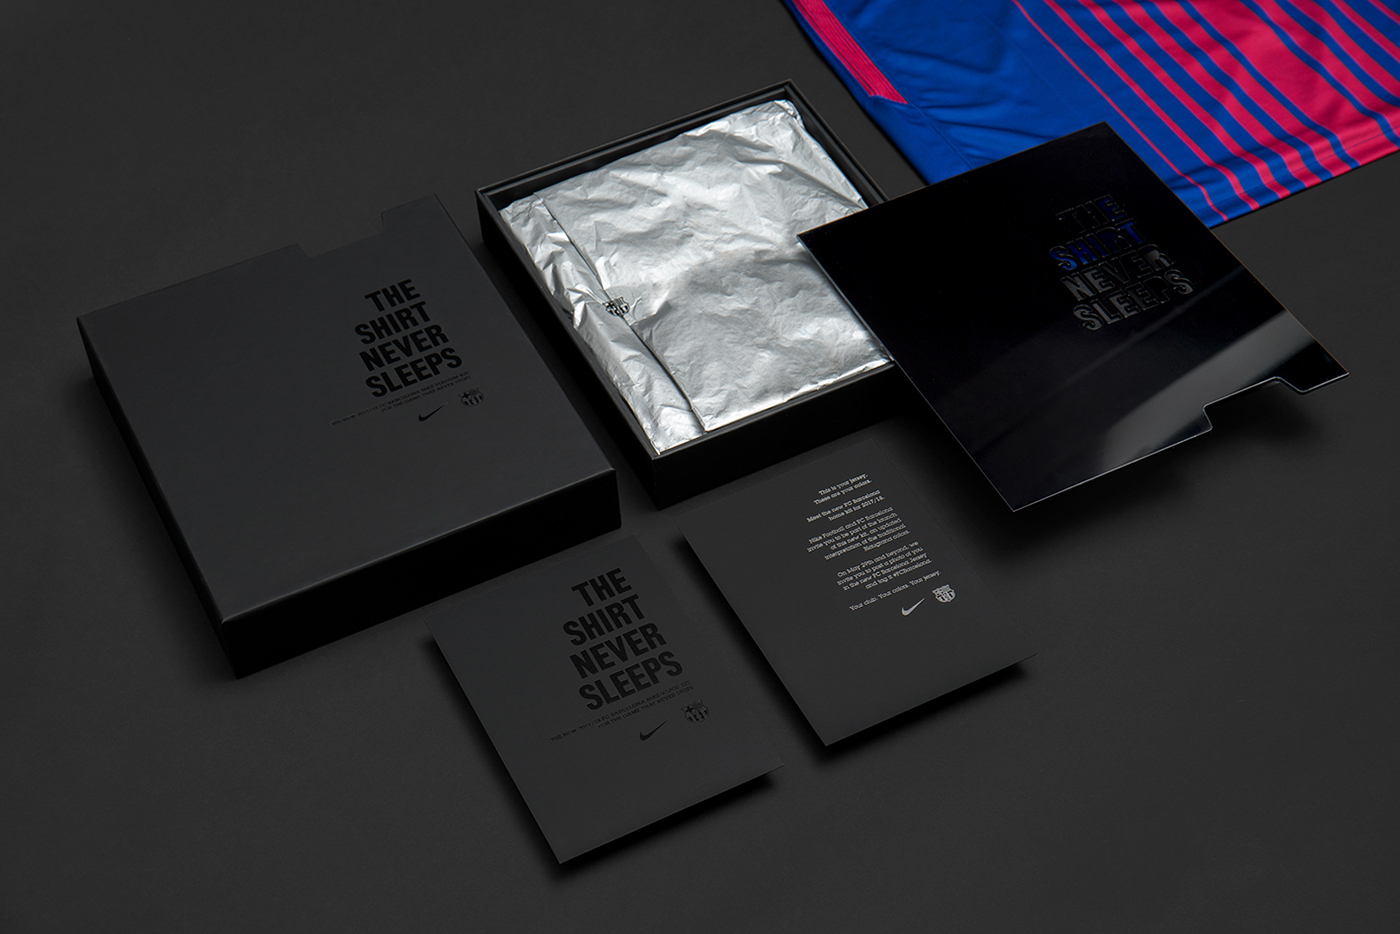 Packaging Barca Vip premiumbox FC Barcelona graphic desing box